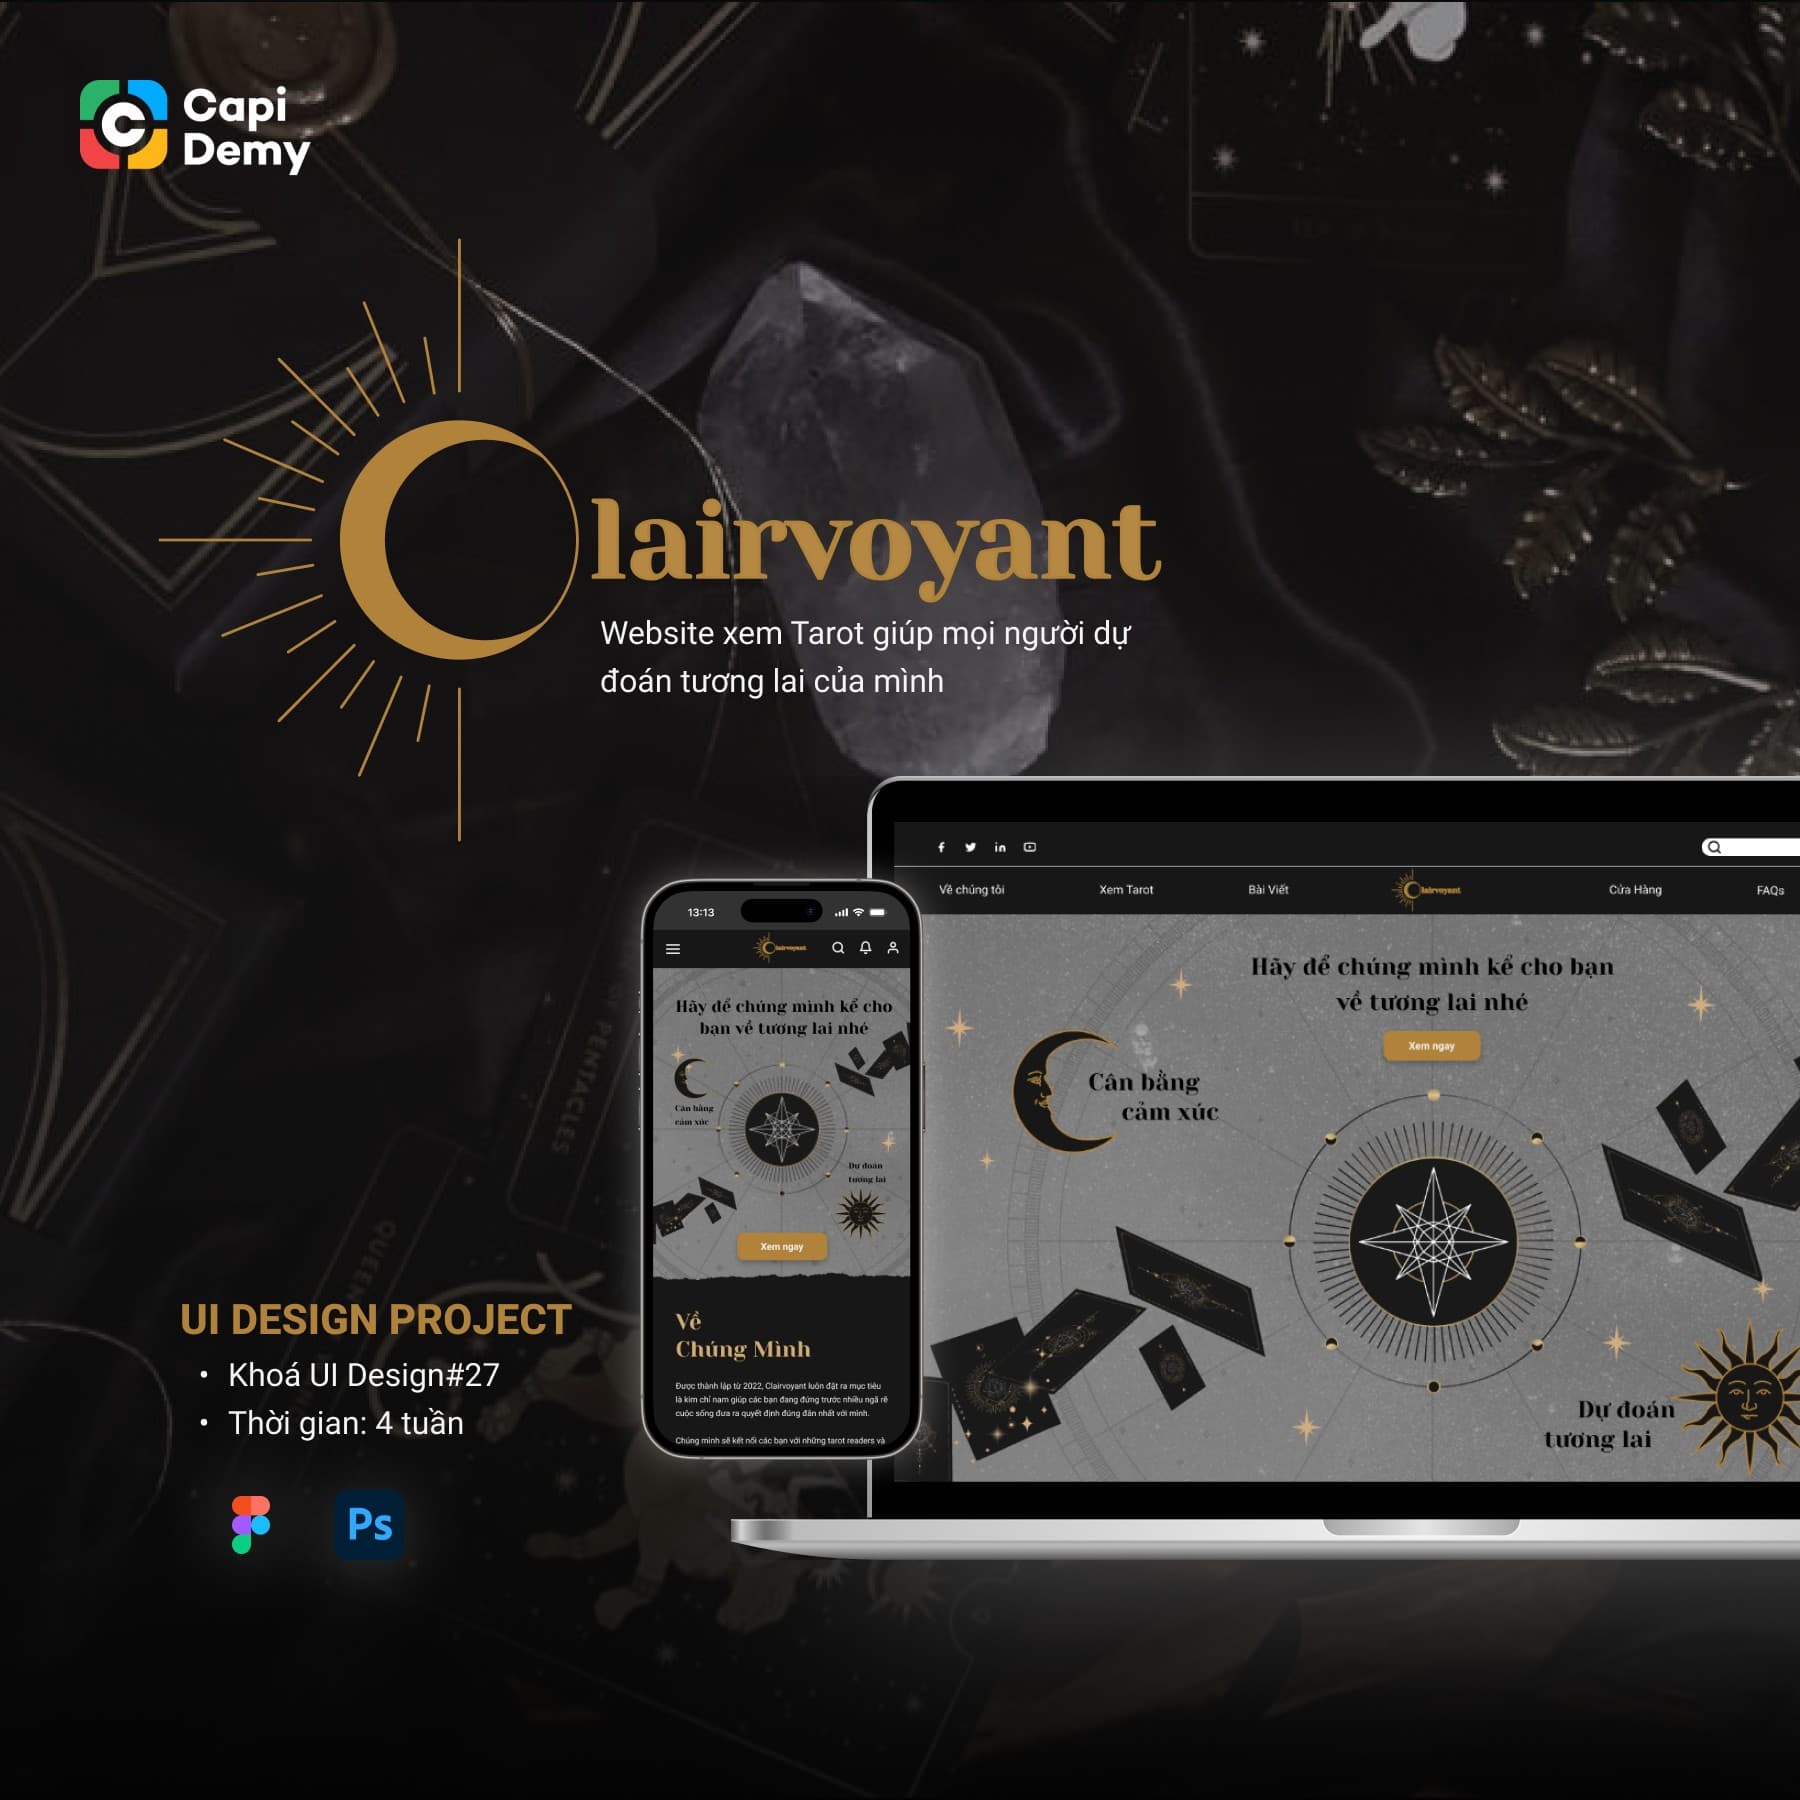 CLAIRVOYANT - Website xem tarot